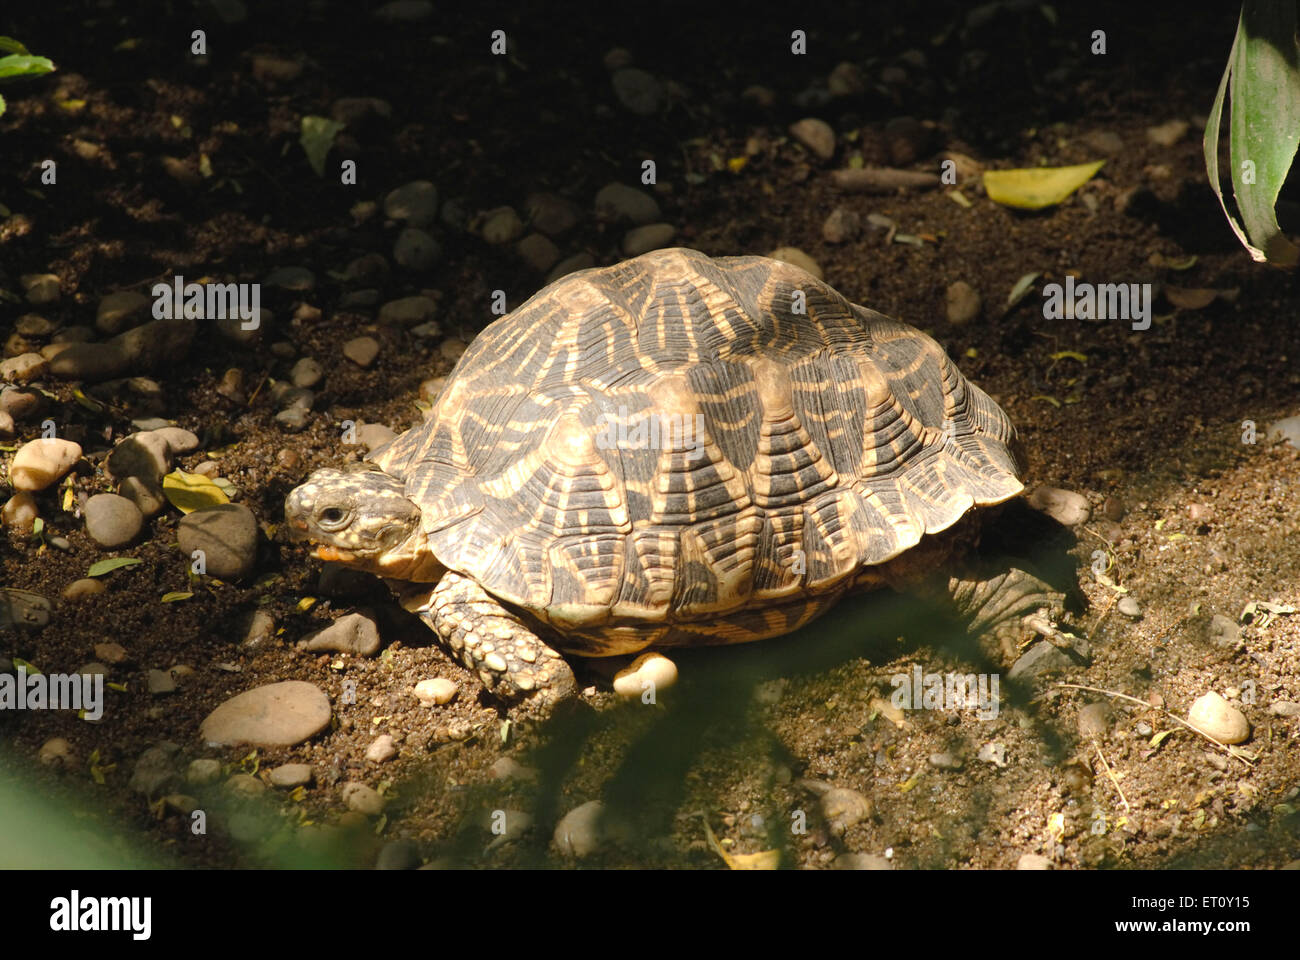 Indische Sterne Schildkröte Geochelone Elegans Reptilien Schlange Park Rajiv Gandhi Zoologischer Park Wildtierforschung Katraj Pune Indien Stockfoto